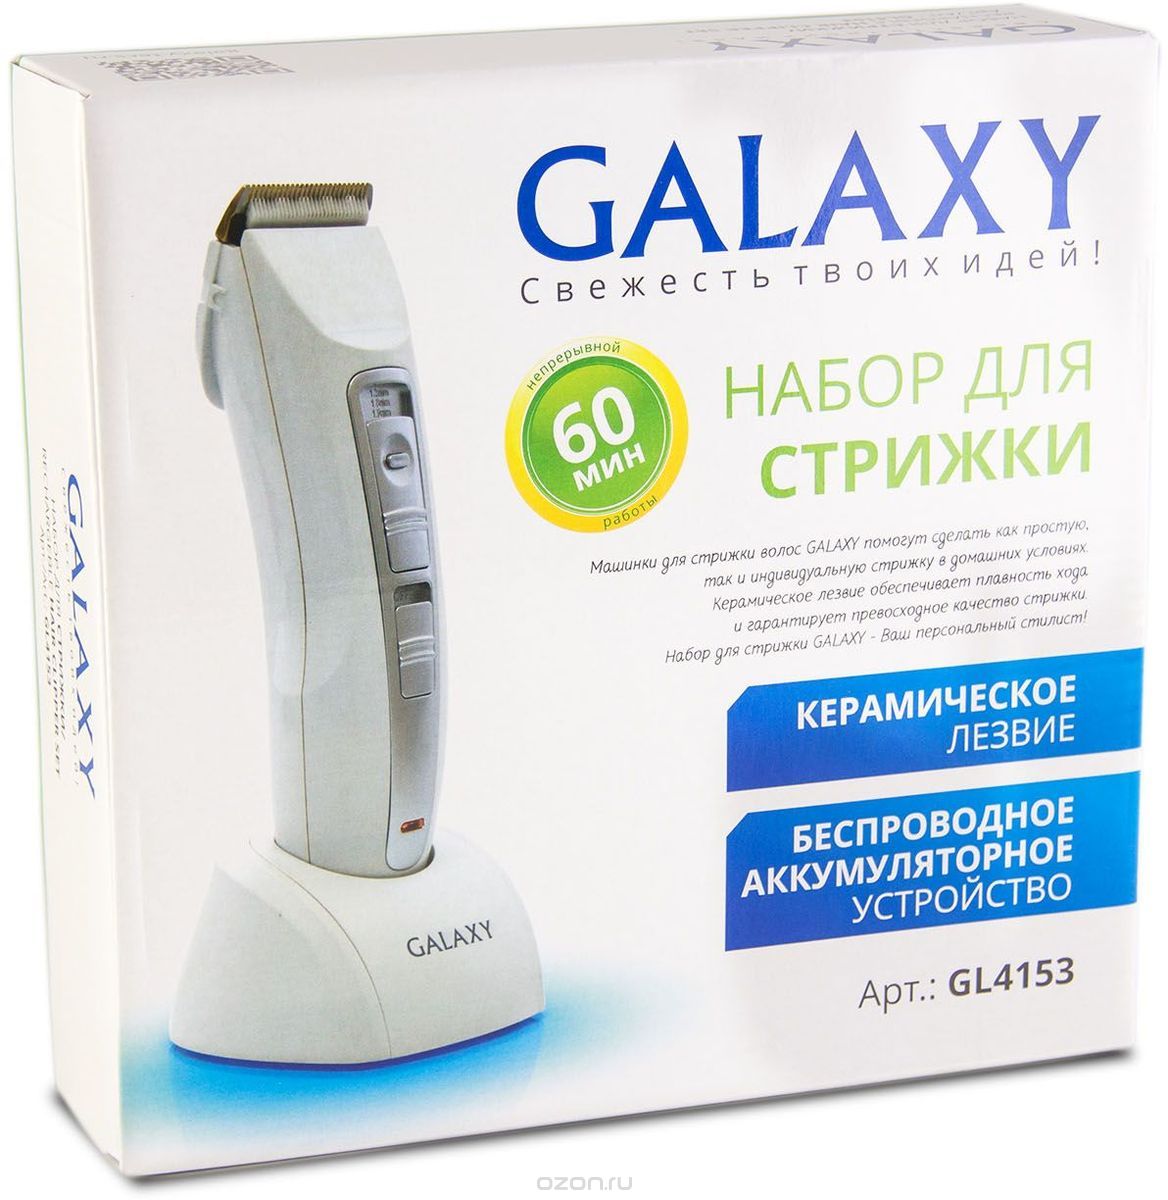    Galaxy GL 4153, White